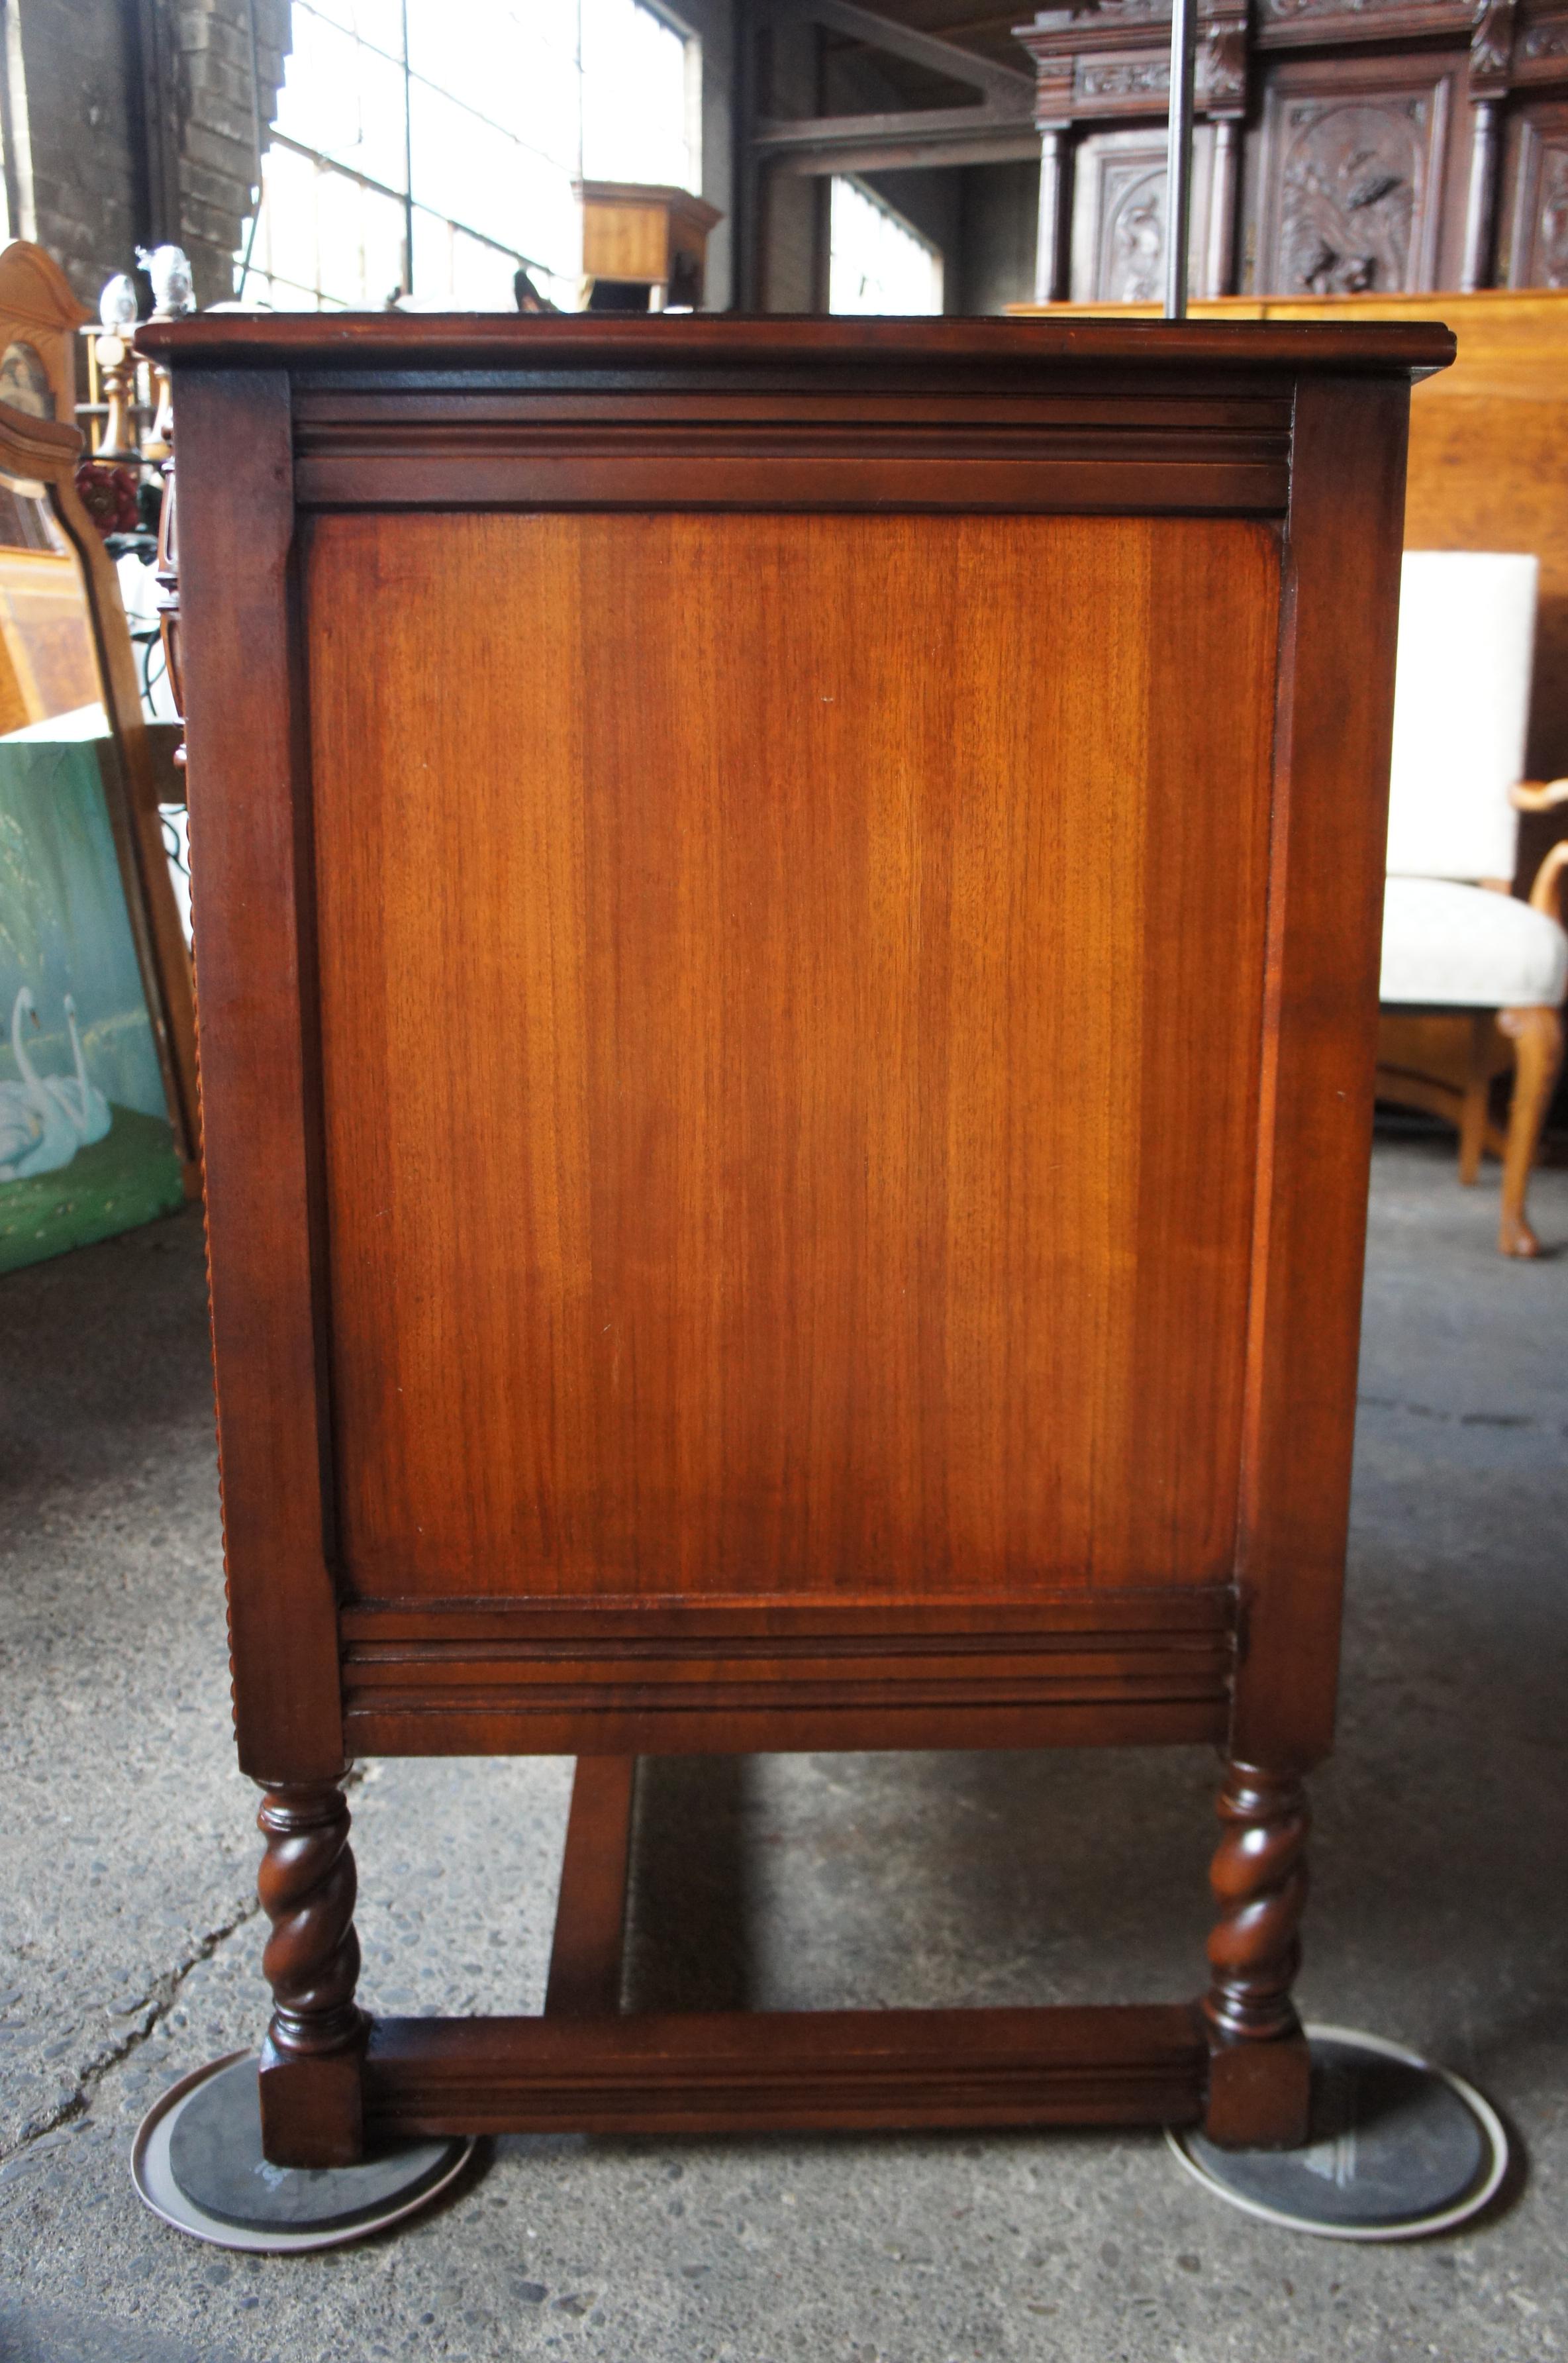 Robert Irwin Furniture Co. Antique Jacobean Revival Walnut Dresser and Mirror 5